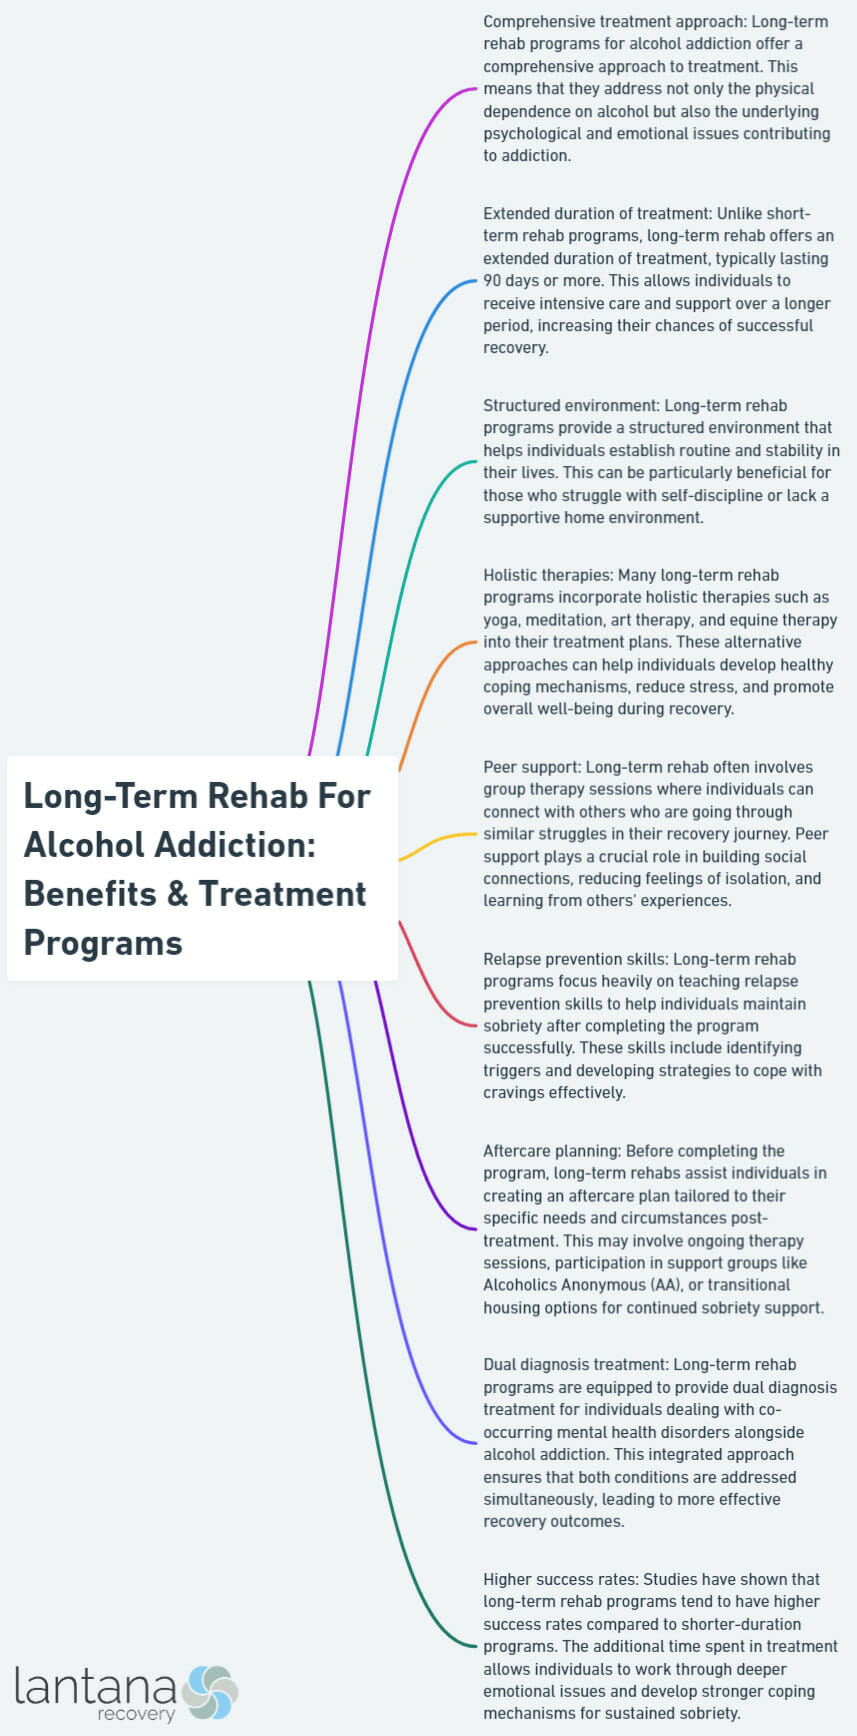 Long-Term Rehab For Alcohol Addiction: Benefits & Treatment Programs
